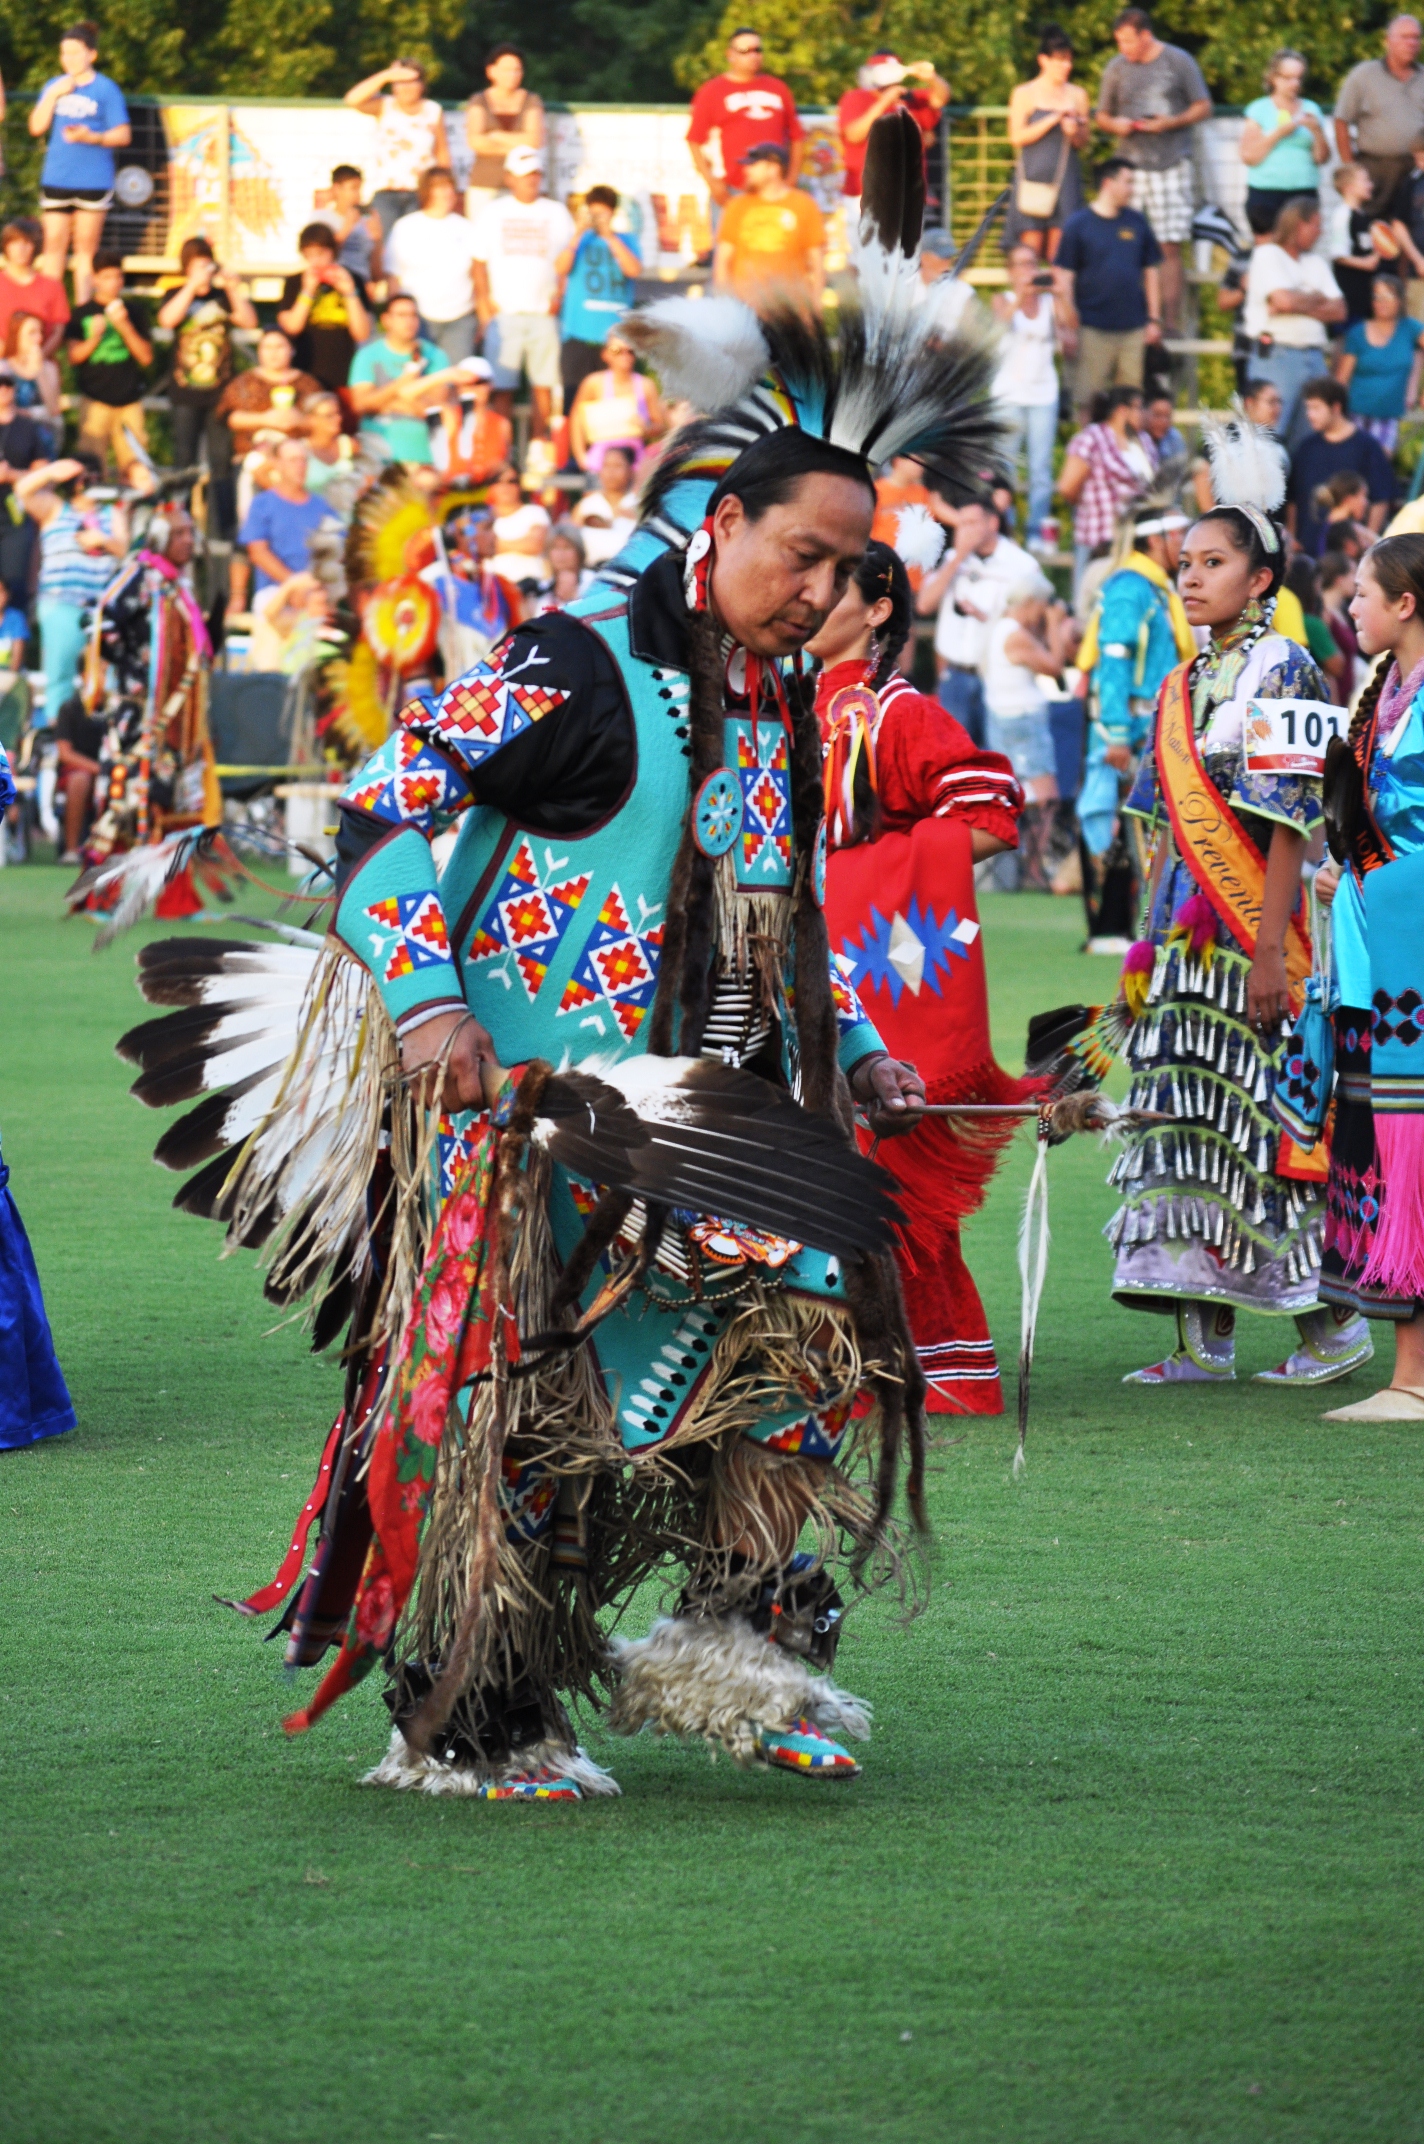 Cherokee National Holiday Celebrates 175th Anniversary of Cherokee